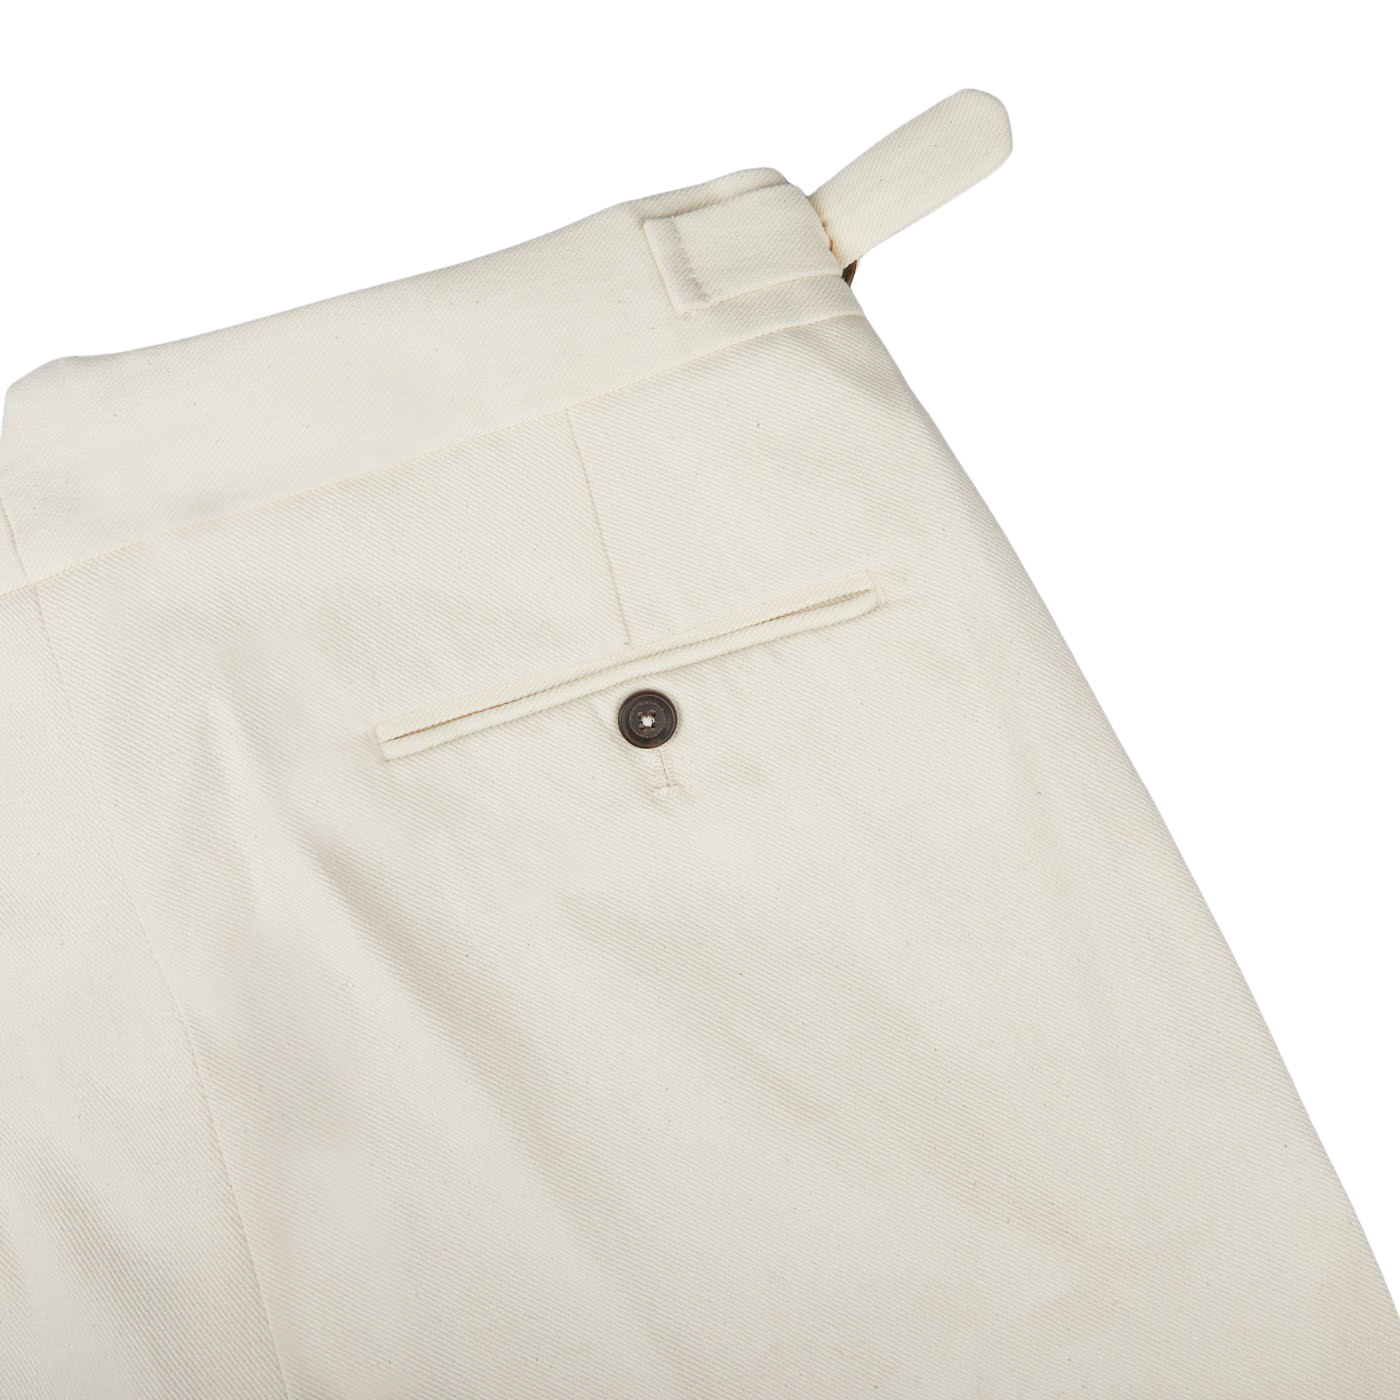 Buy Monte Carlo Mens Polyester Formal Pants (2220840812Cf-2-32, Dark Grey,  32) at Amazon.in